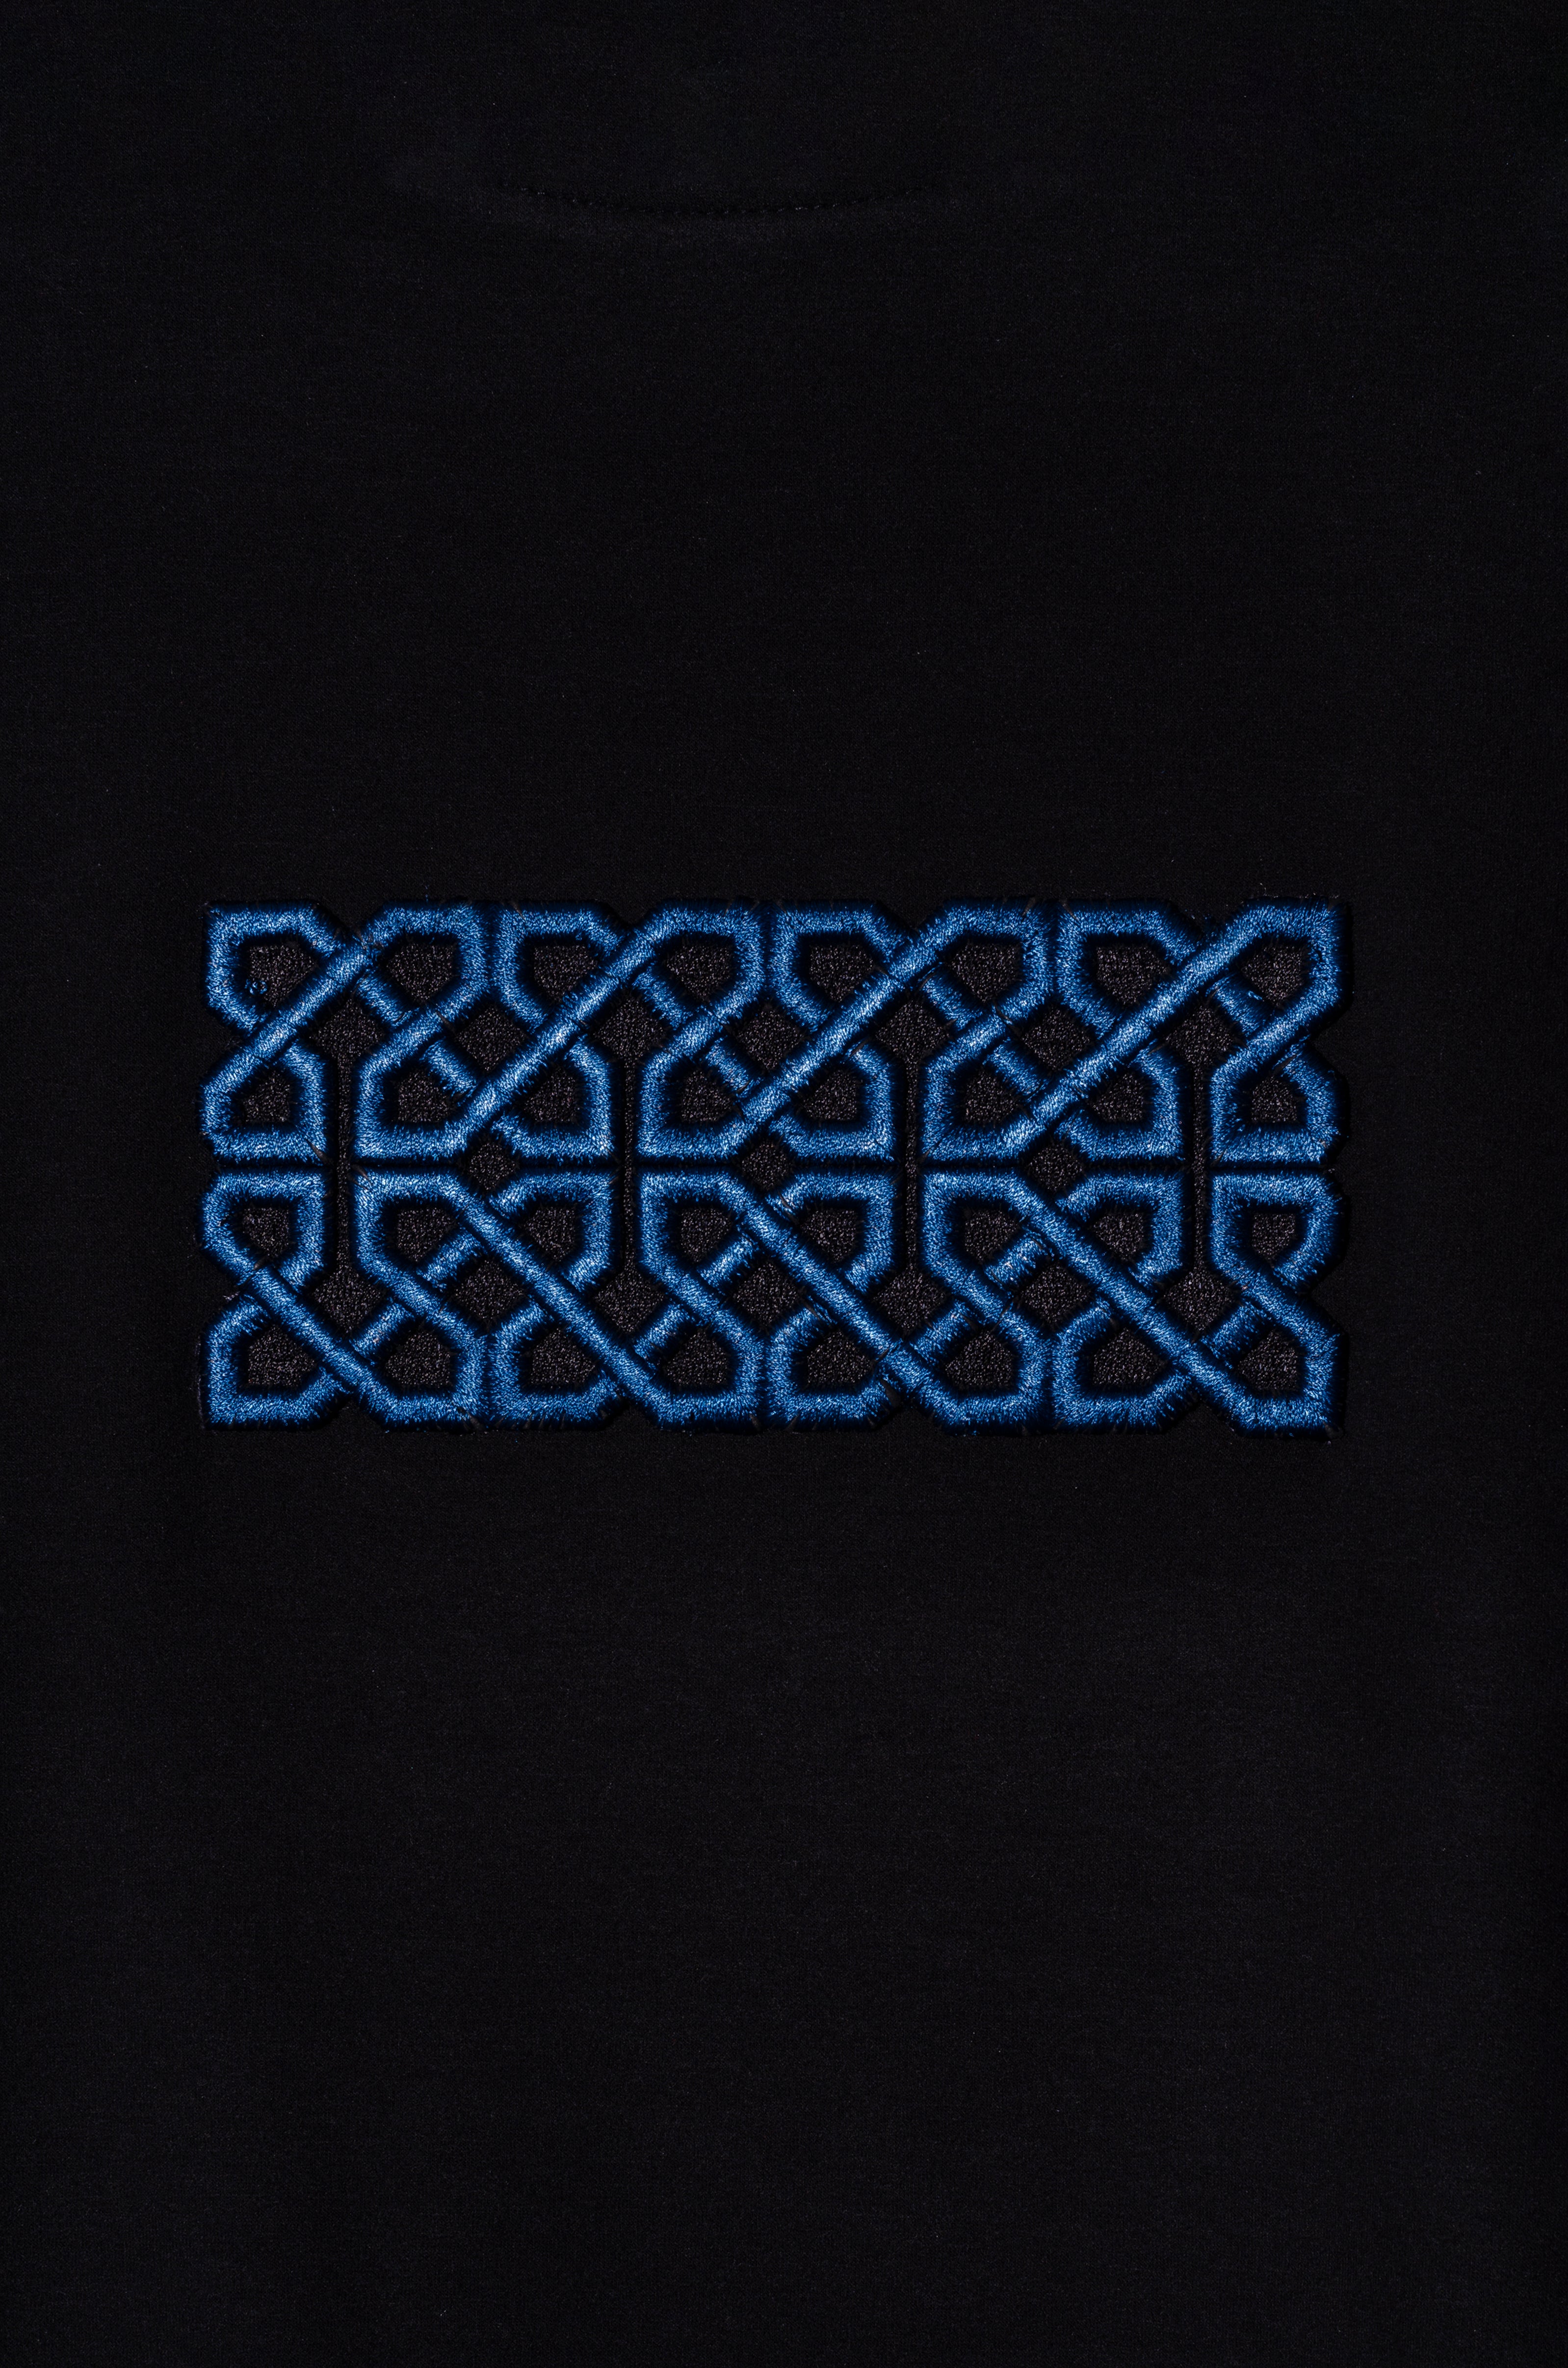 Geometric Motif T-shirt